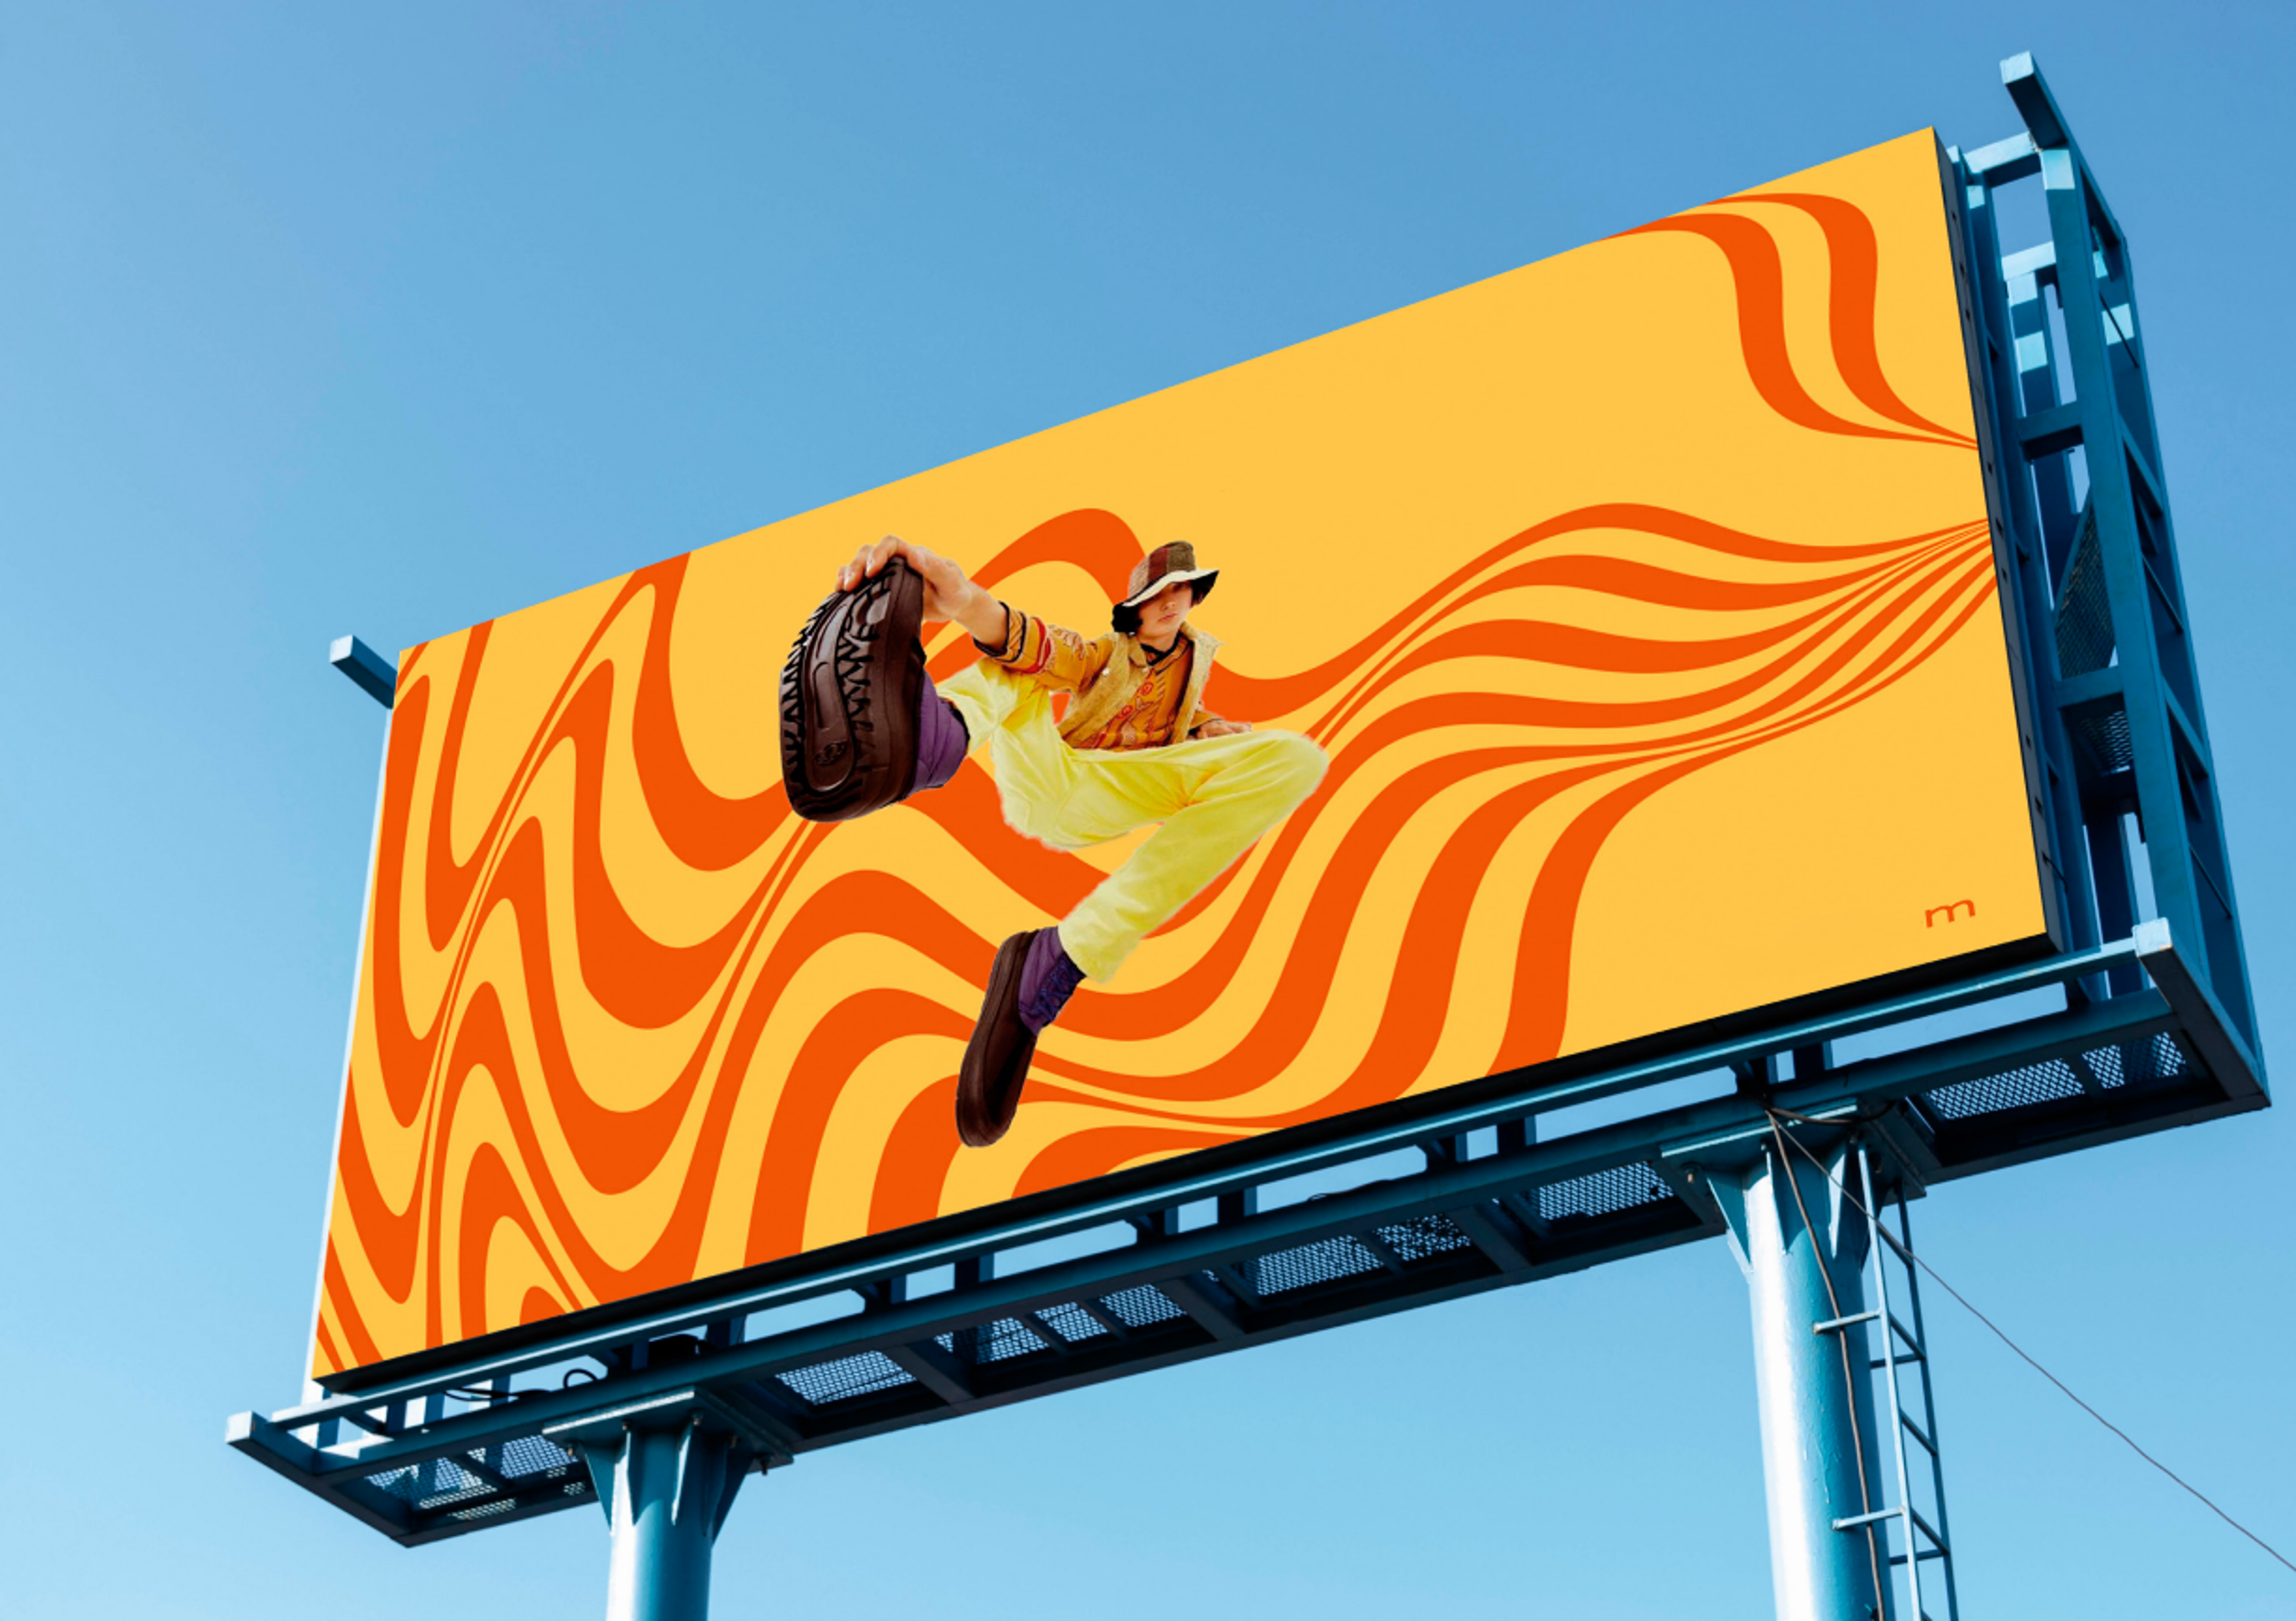 A vibrant billboard showcasing a dancer mid-move against an orange swirl backdrop under a clear blue sky.